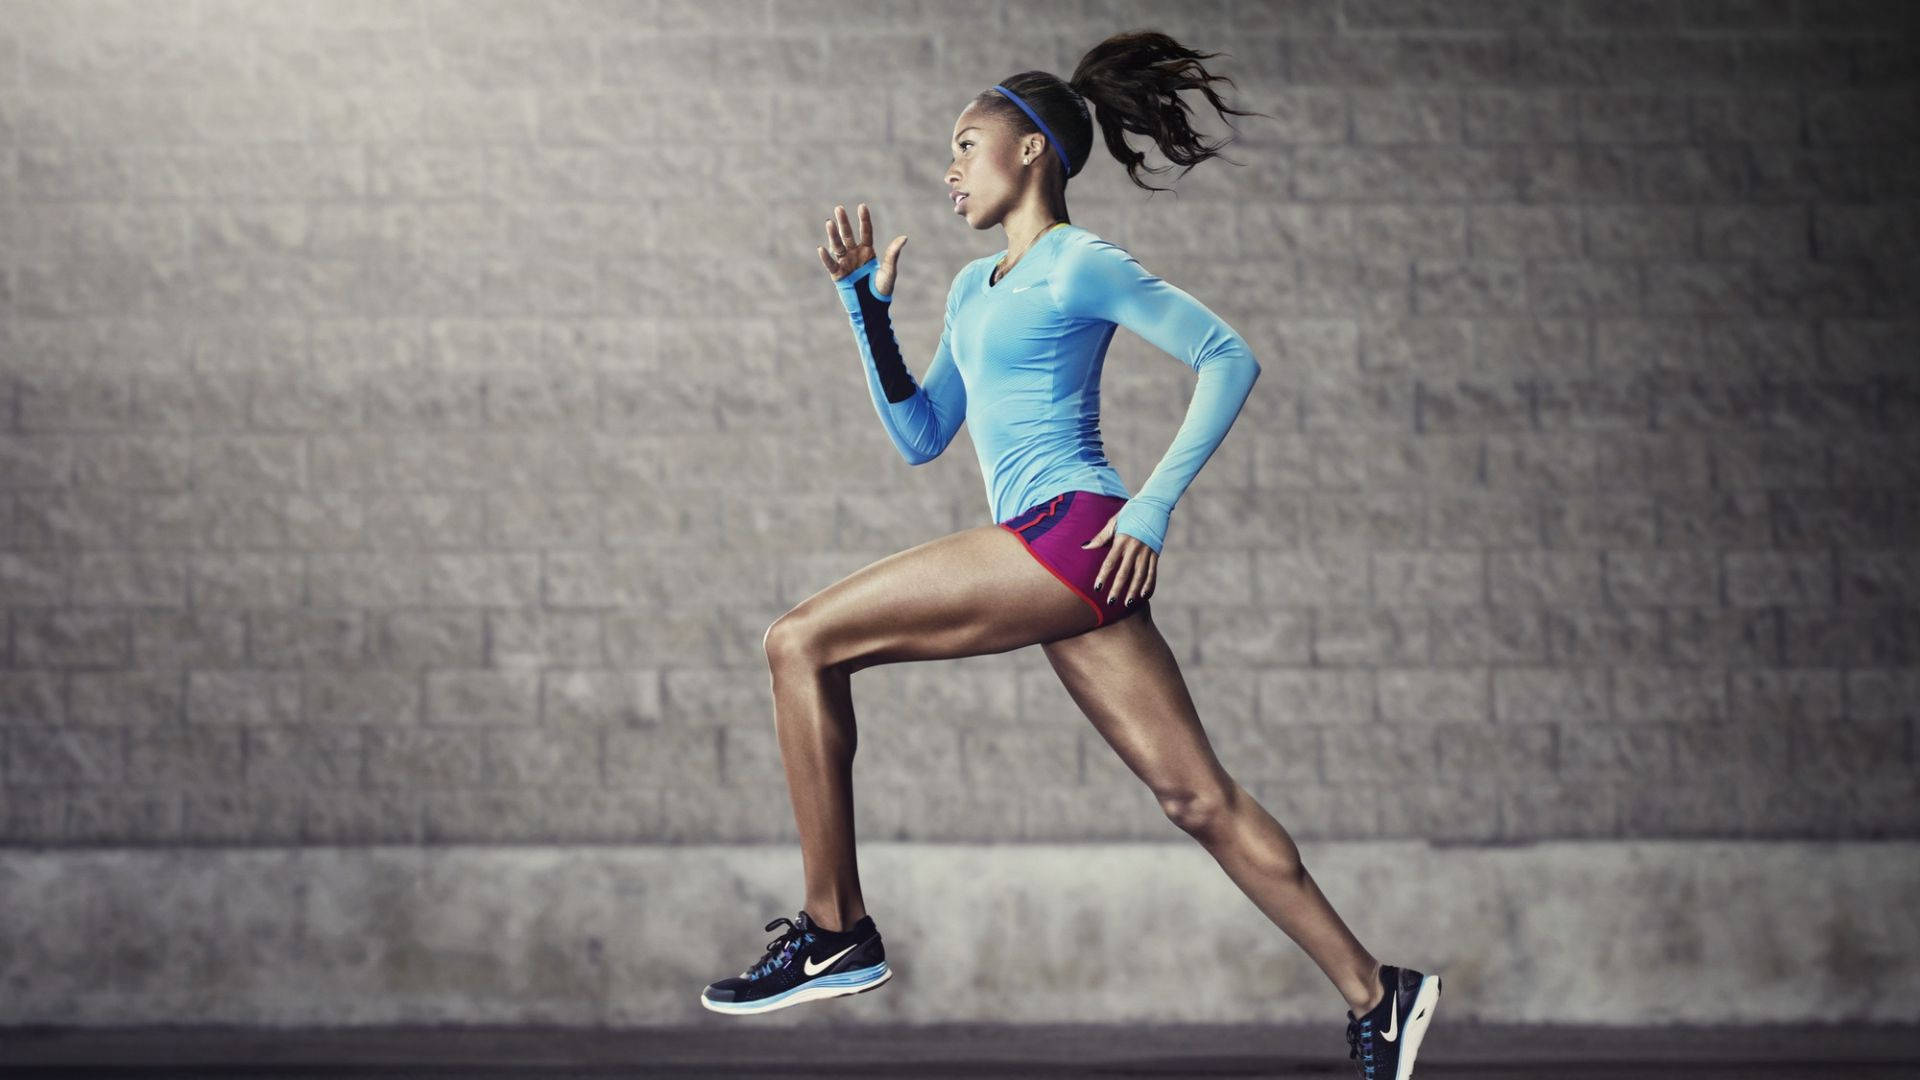 Nike Girl Athlete Running Background